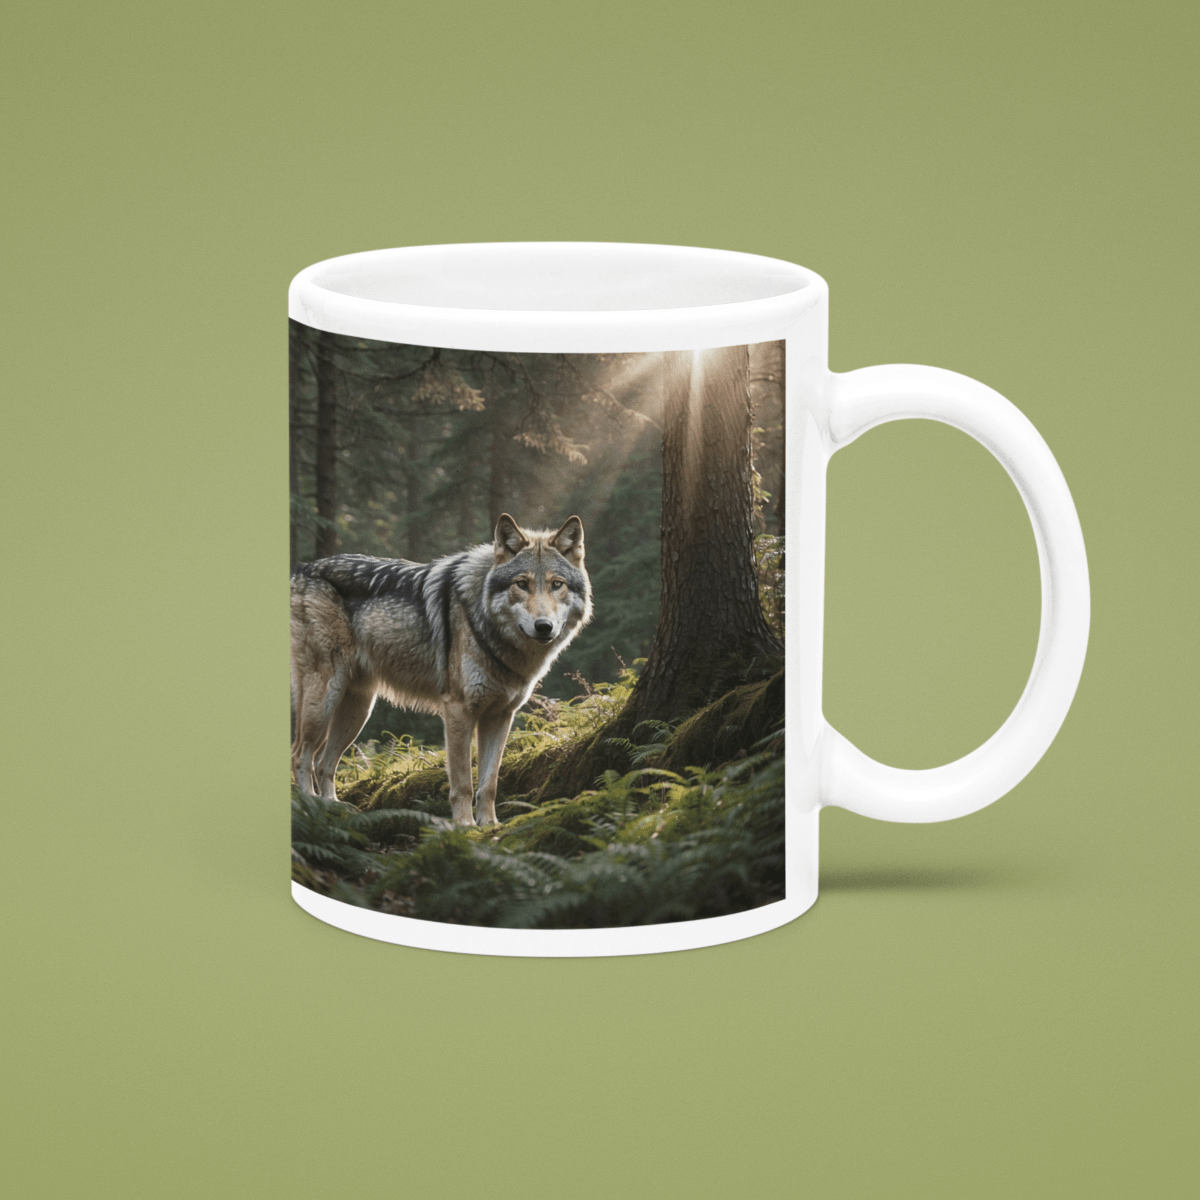 Printify Mug 11oz Coffee Mug, Wolf in Forest Coffee Mug, Wolf Coffee, Tea Mug, Birthday Gift, Christmas Gift, Friend Gift, White 11 oz Ceramic 15159037515131173039